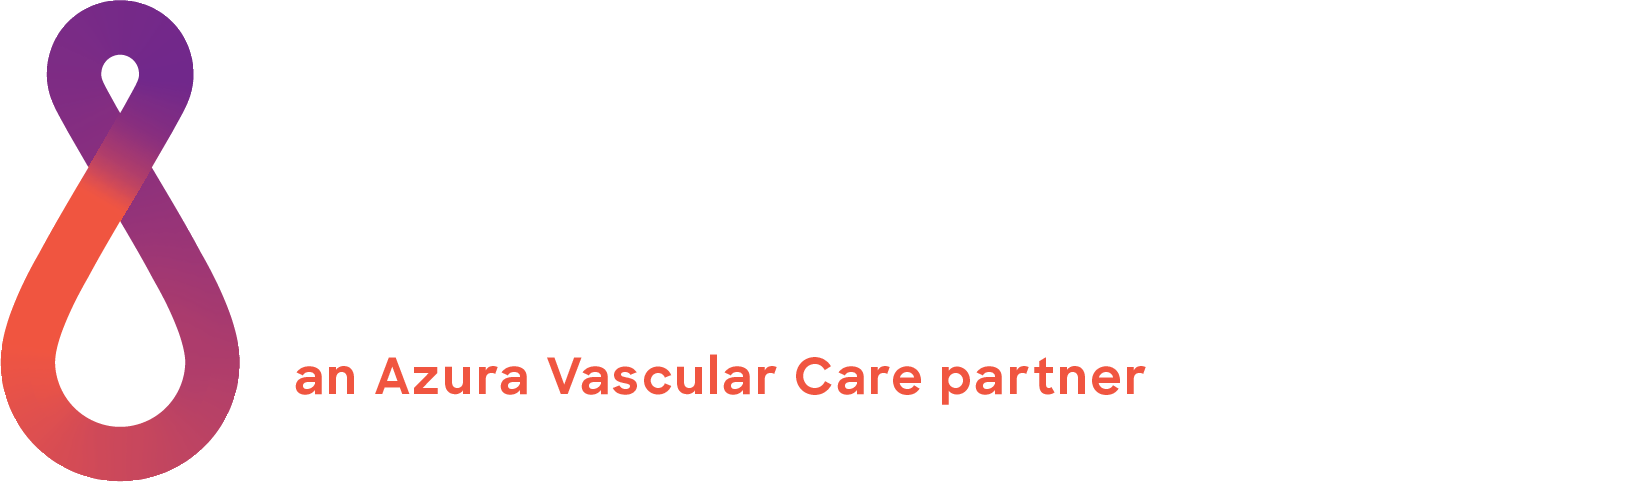 Verrazano Vascular Associates at AACP_Cobrand OBS Logo_Horizontal_4C KO.png